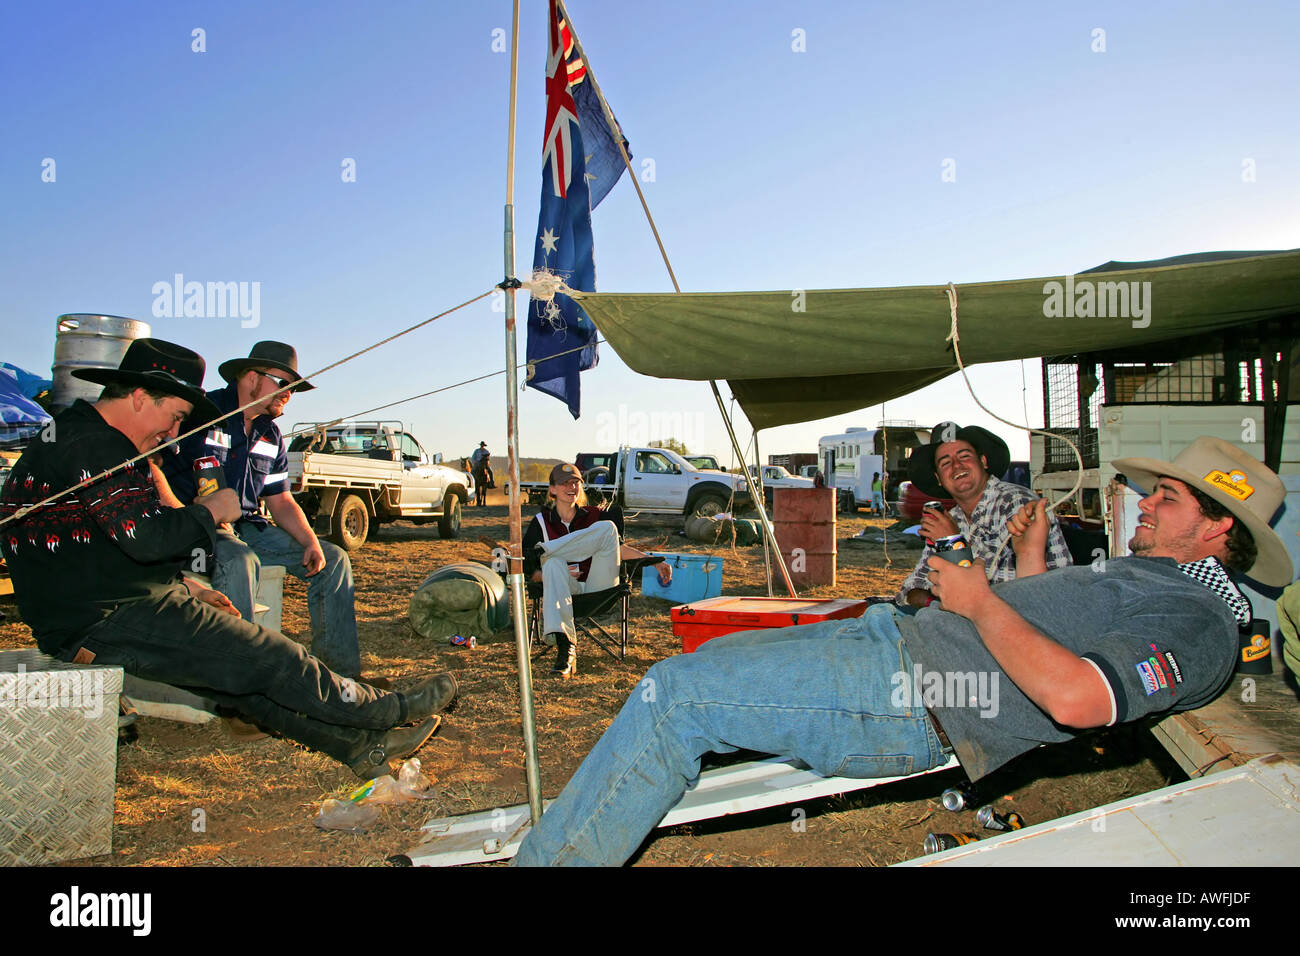 Australische Jugend auf dem Campingplatz, Mt Isa rodeo Stockfoto